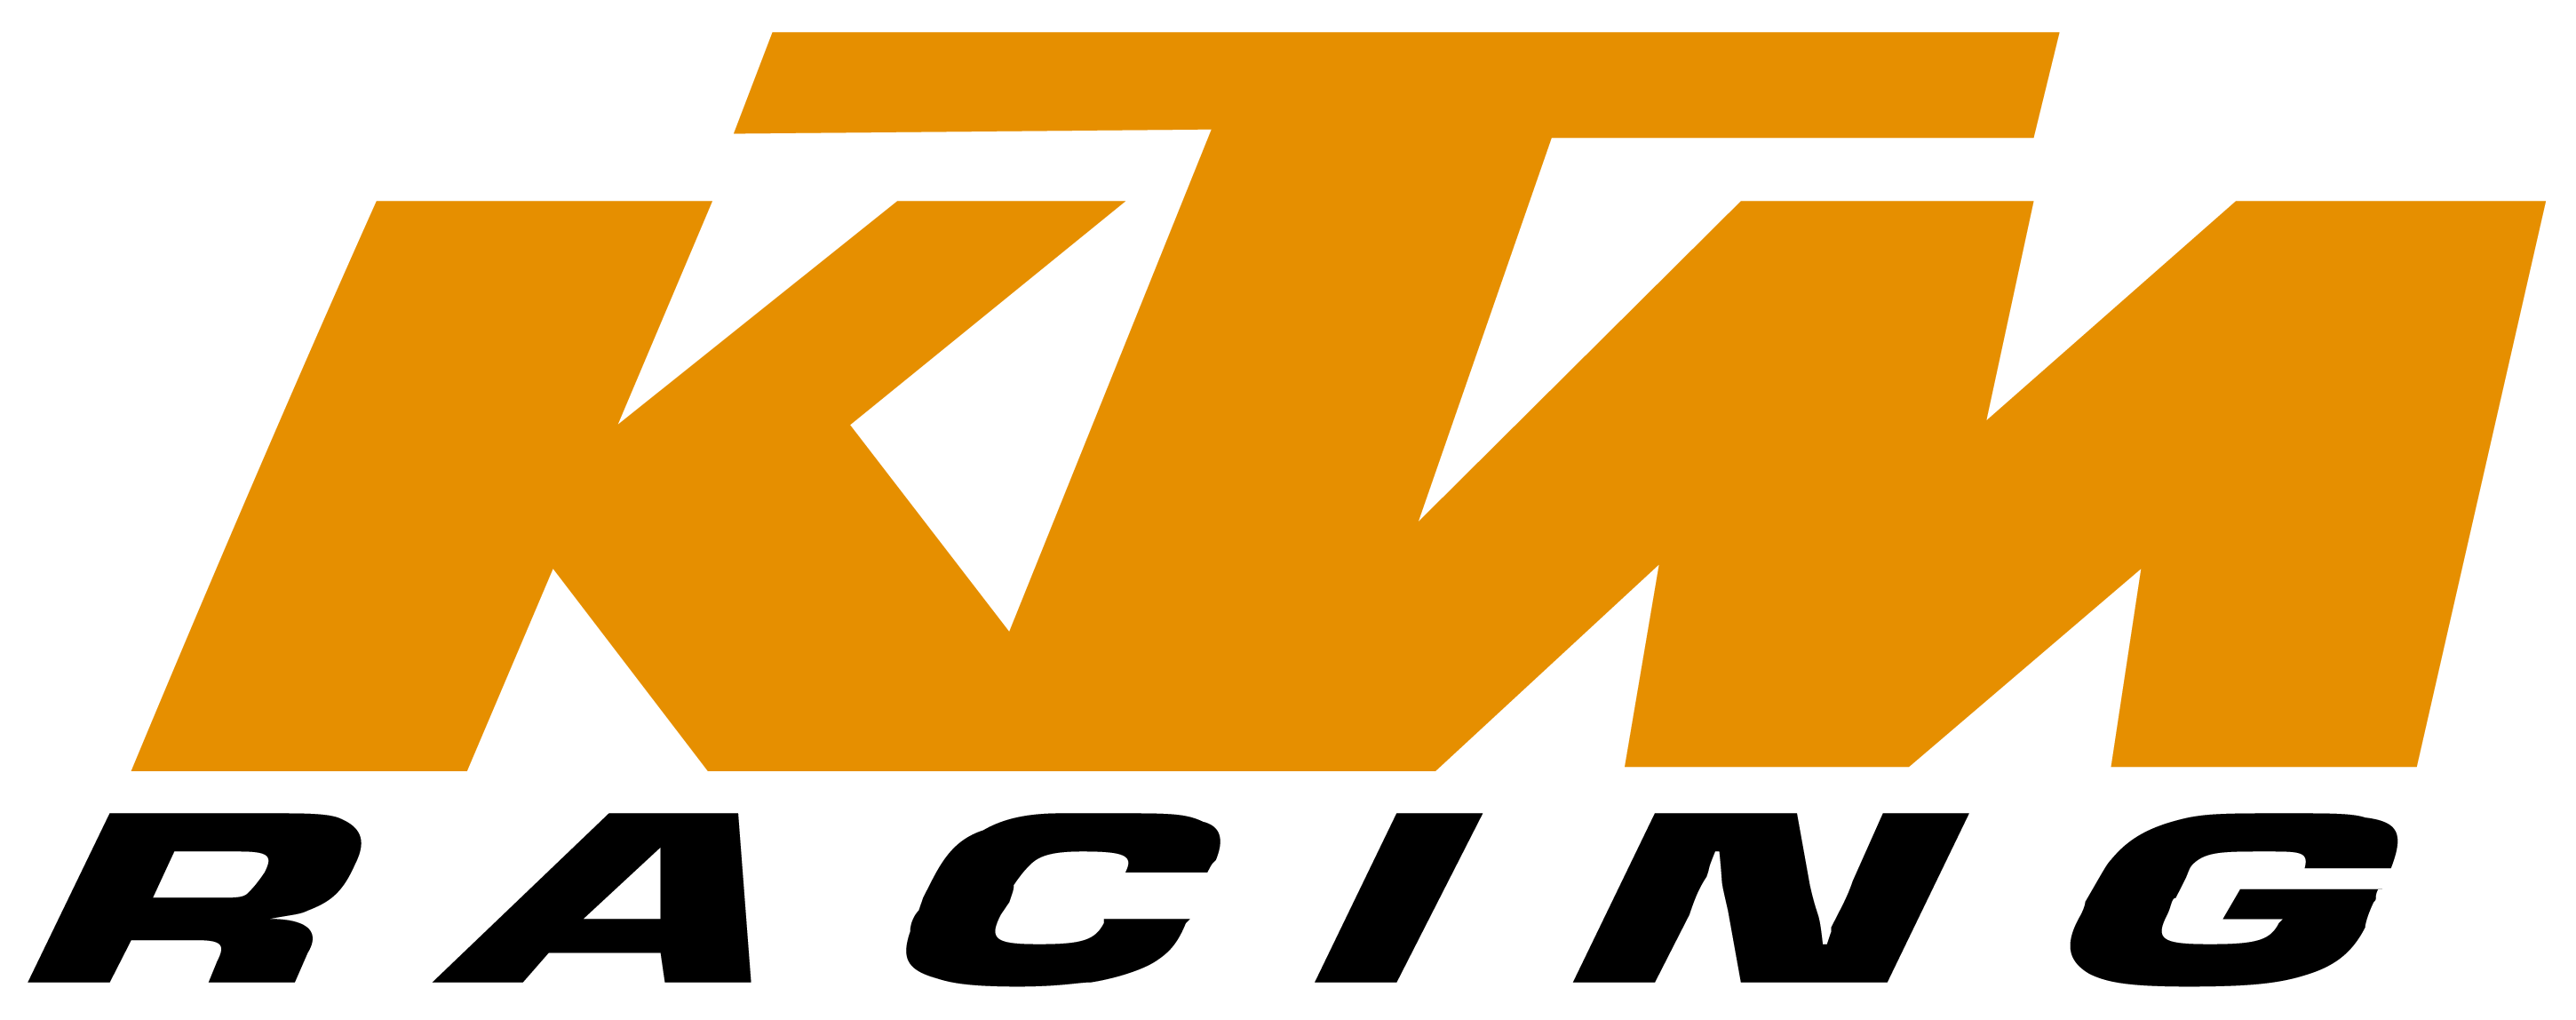 KTM Logo - KTM logo | Motorcycle Brands